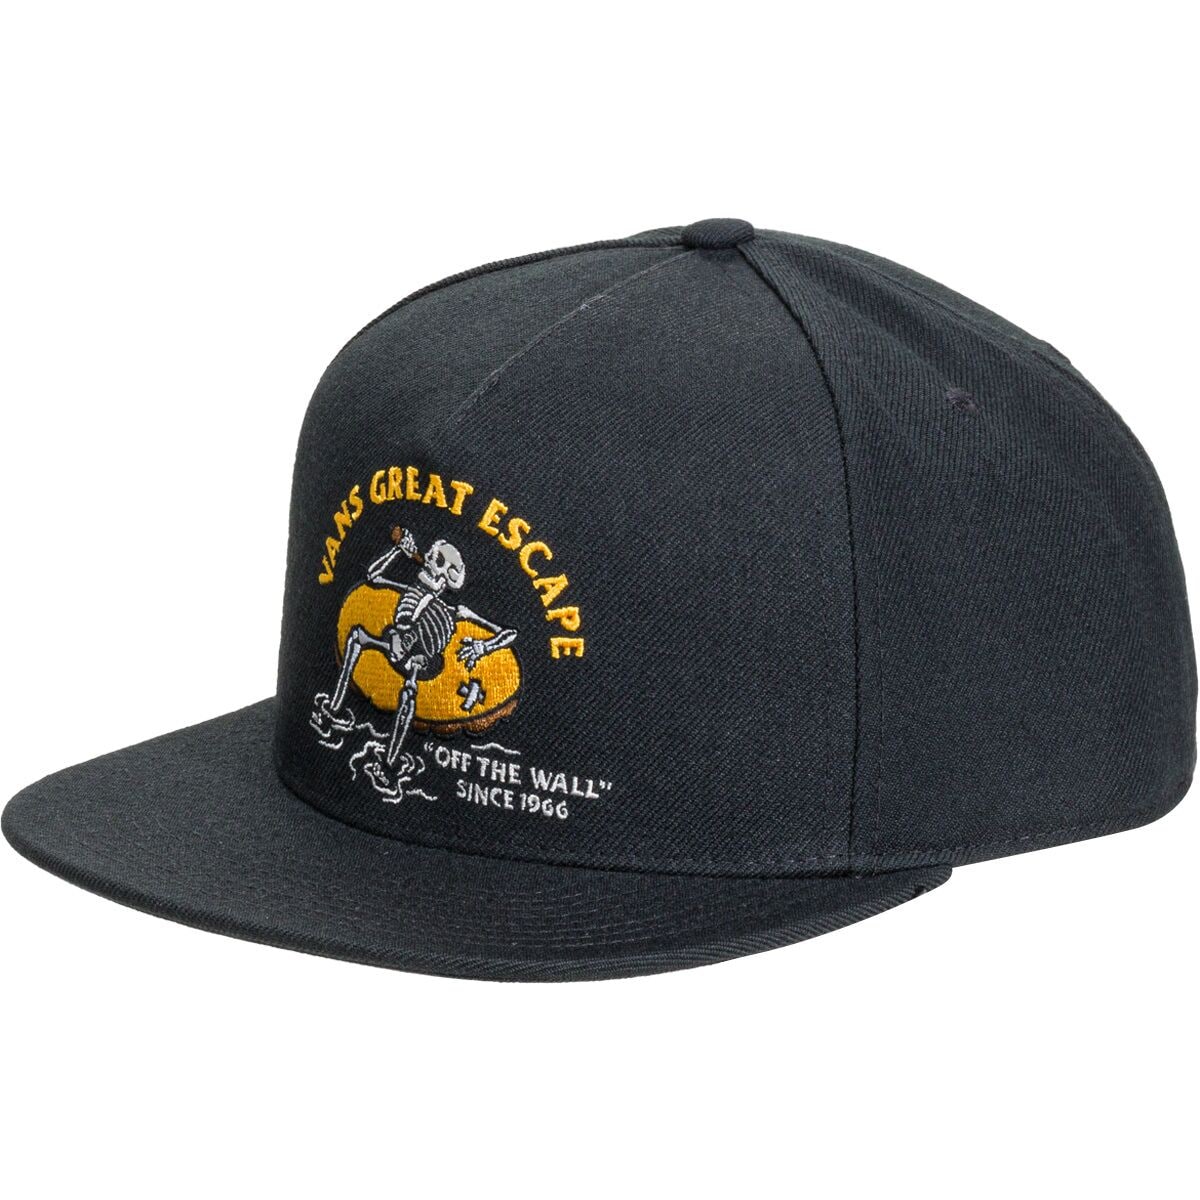 Vans Great Escape Snapback Hat